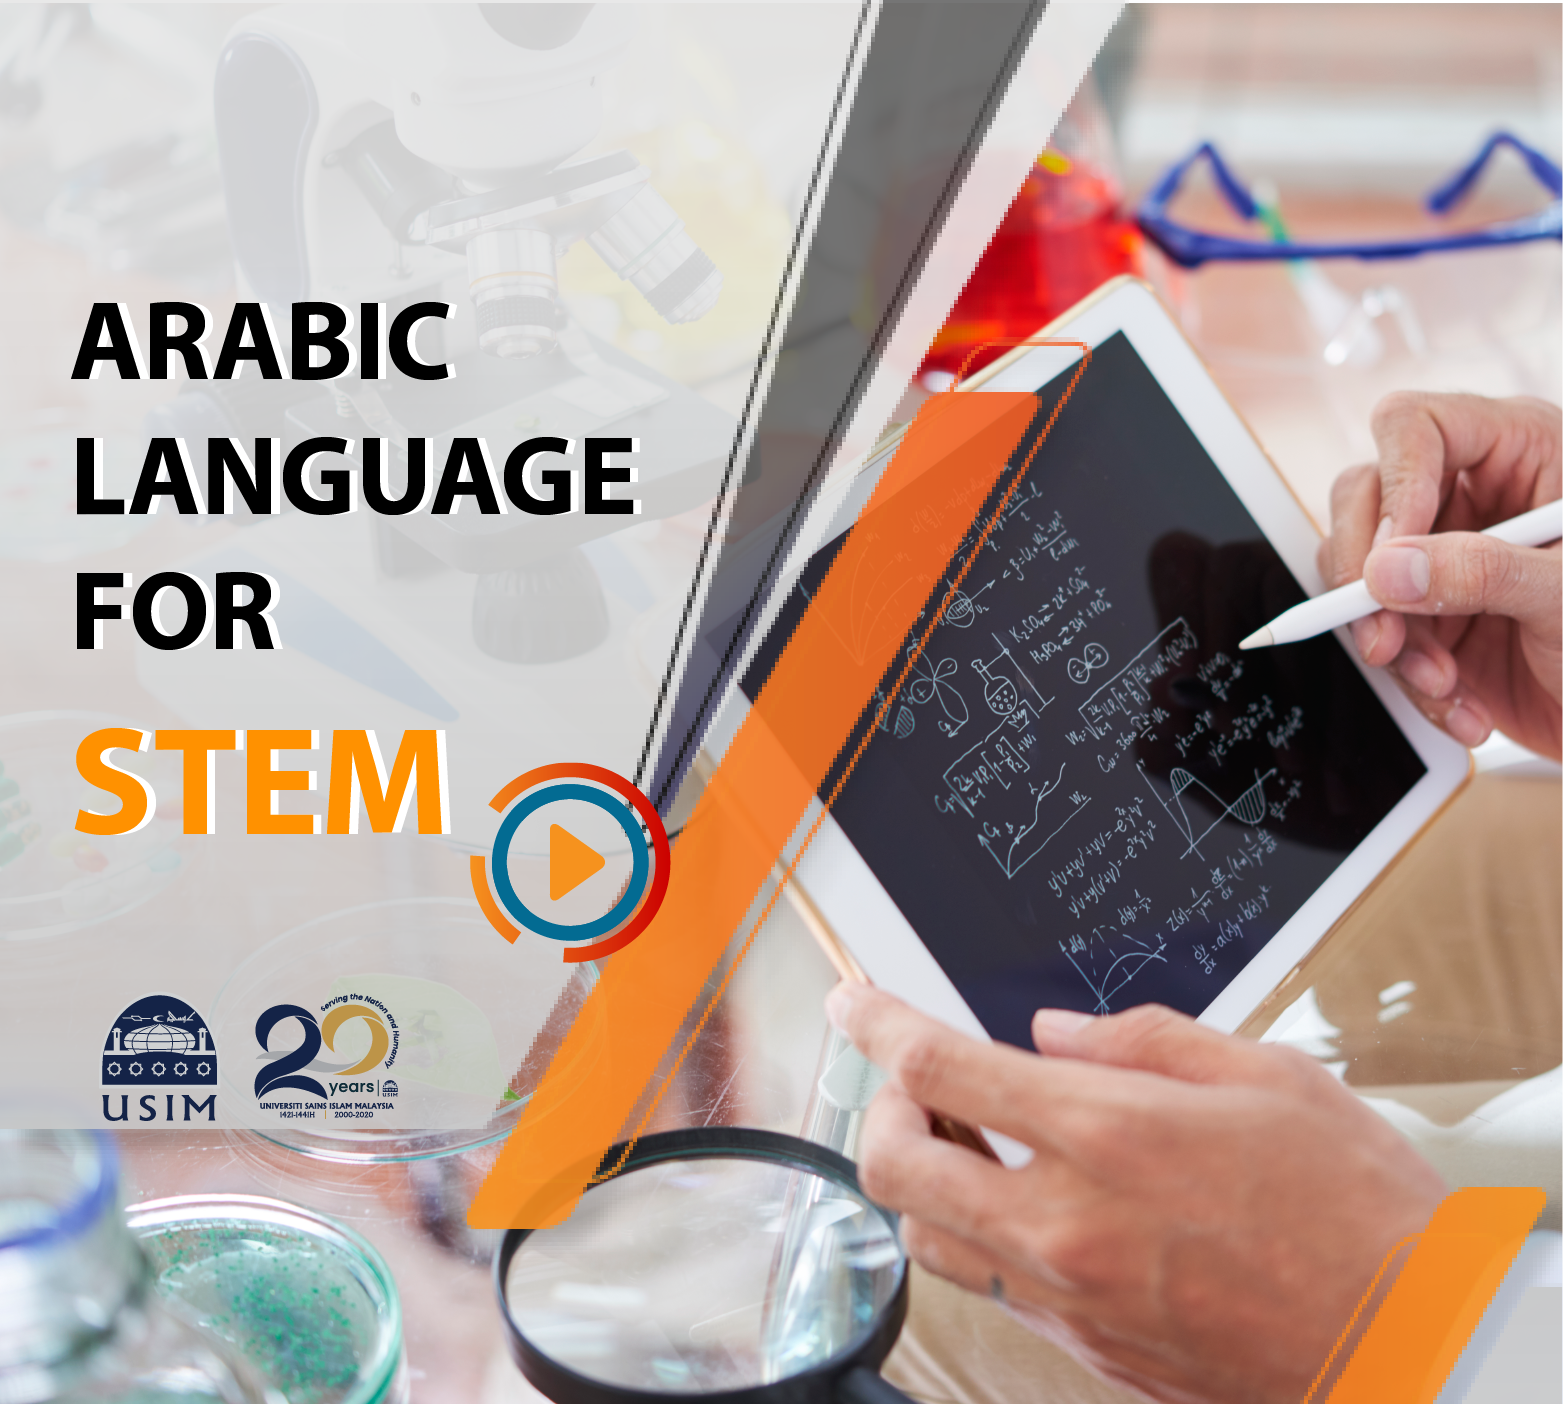 ARABIC LANGUAGE FOR STEM